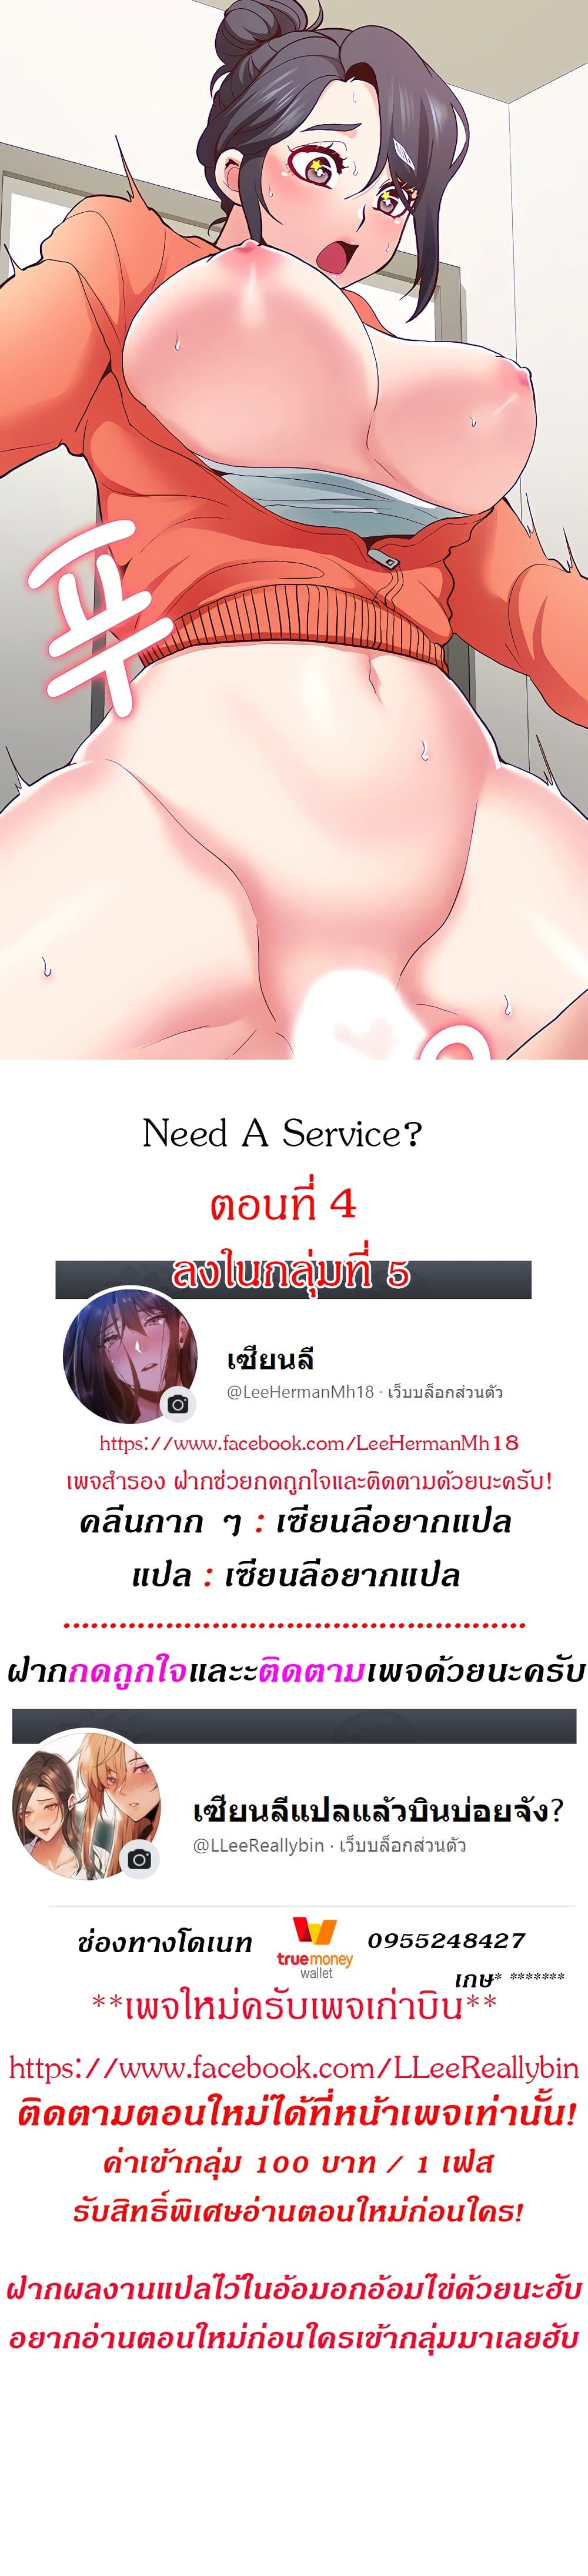 Need A Service 4 (1)